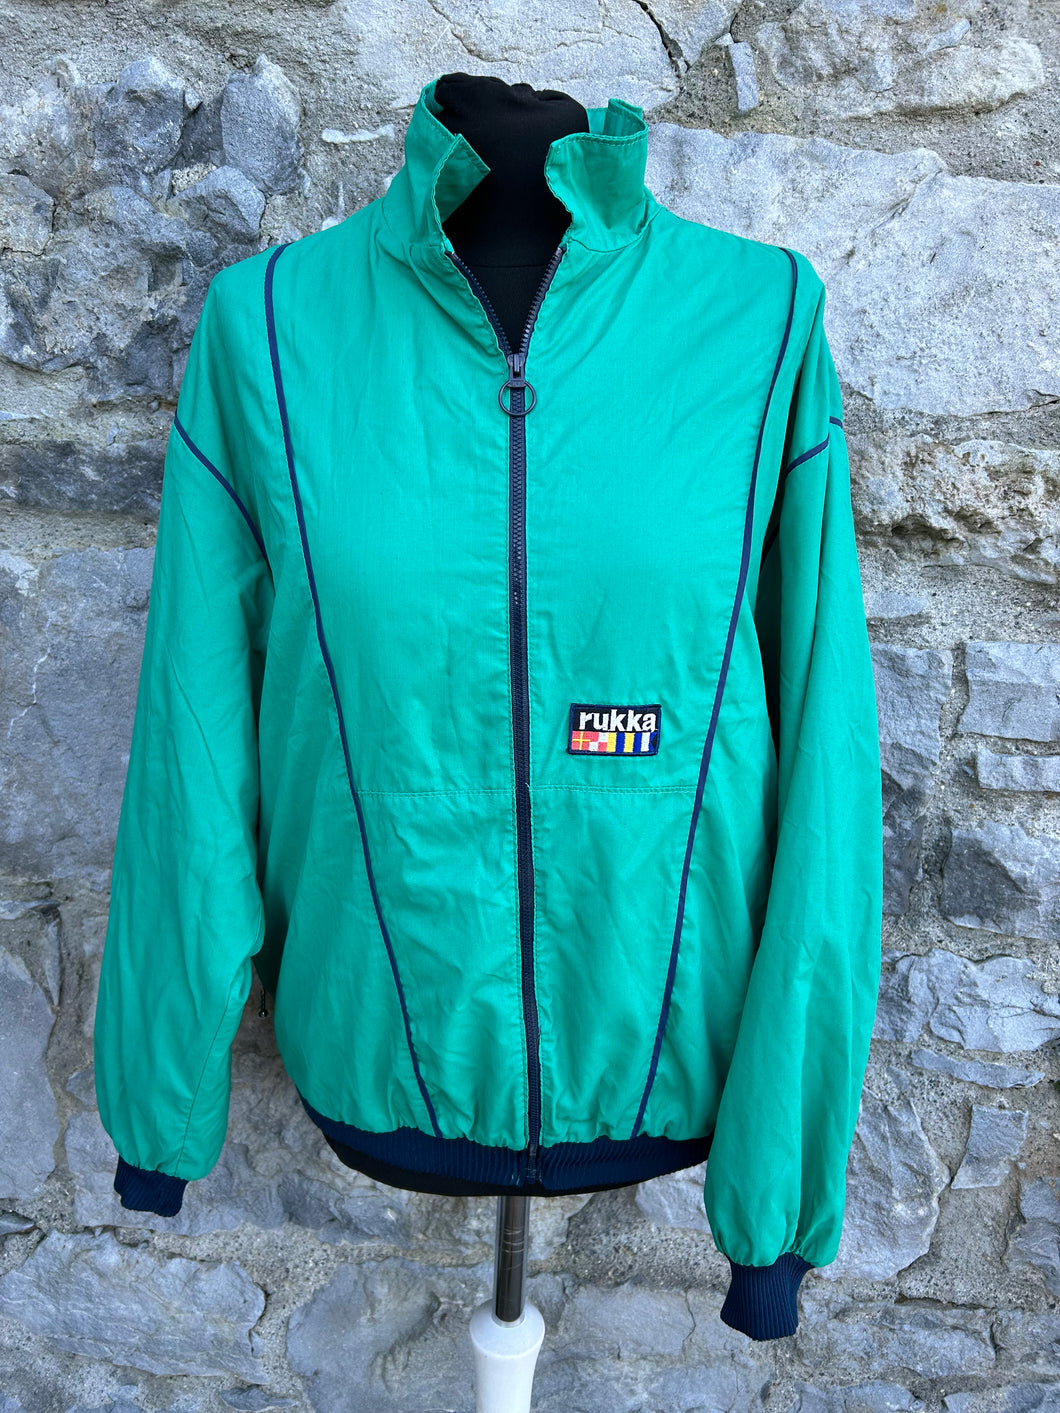 80s Green sport jacket Small